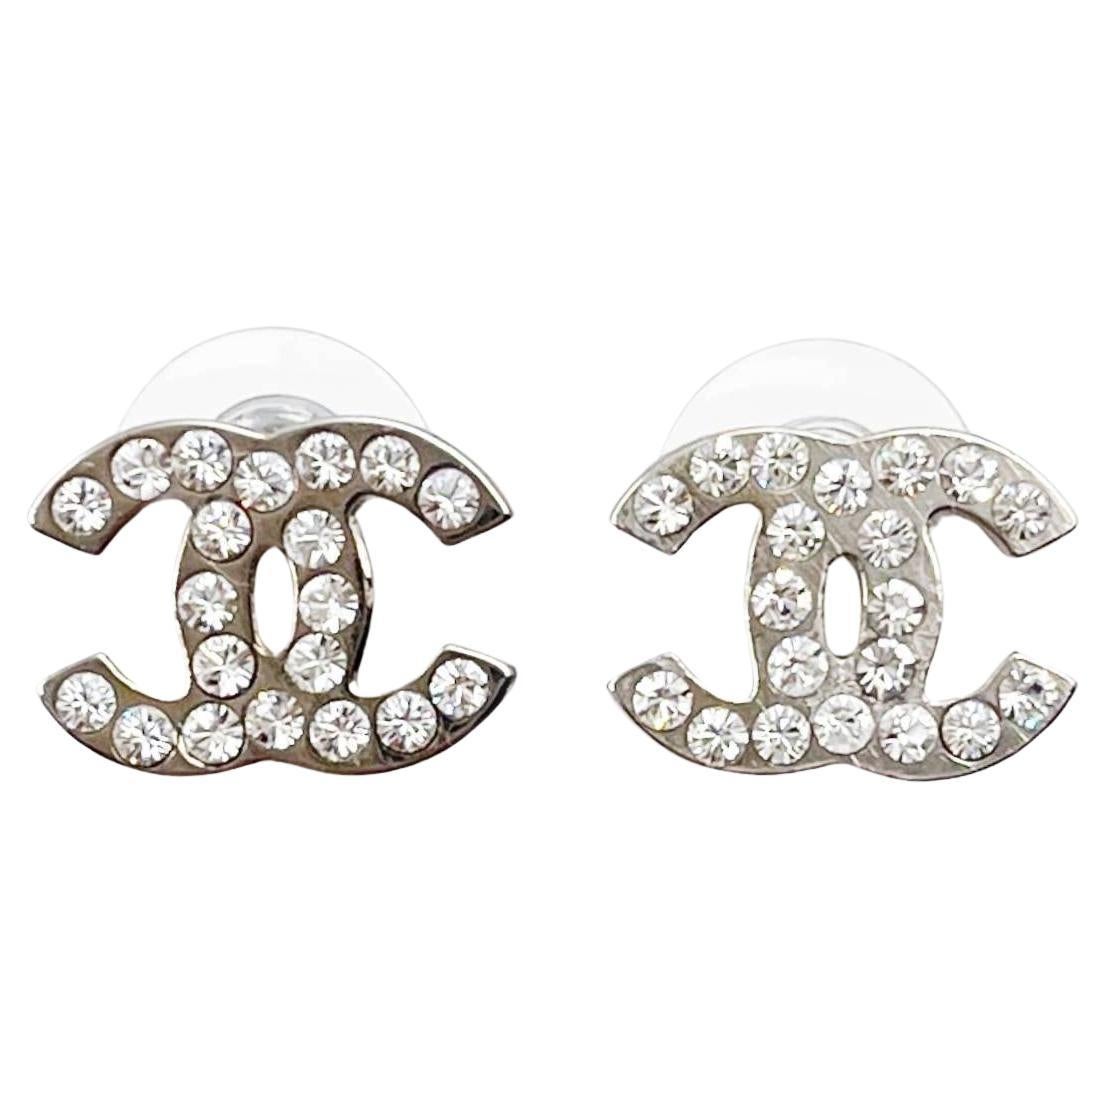 Chanel Silver CC Jewelry Sale pendientes y joyerÃa joyerÃa de